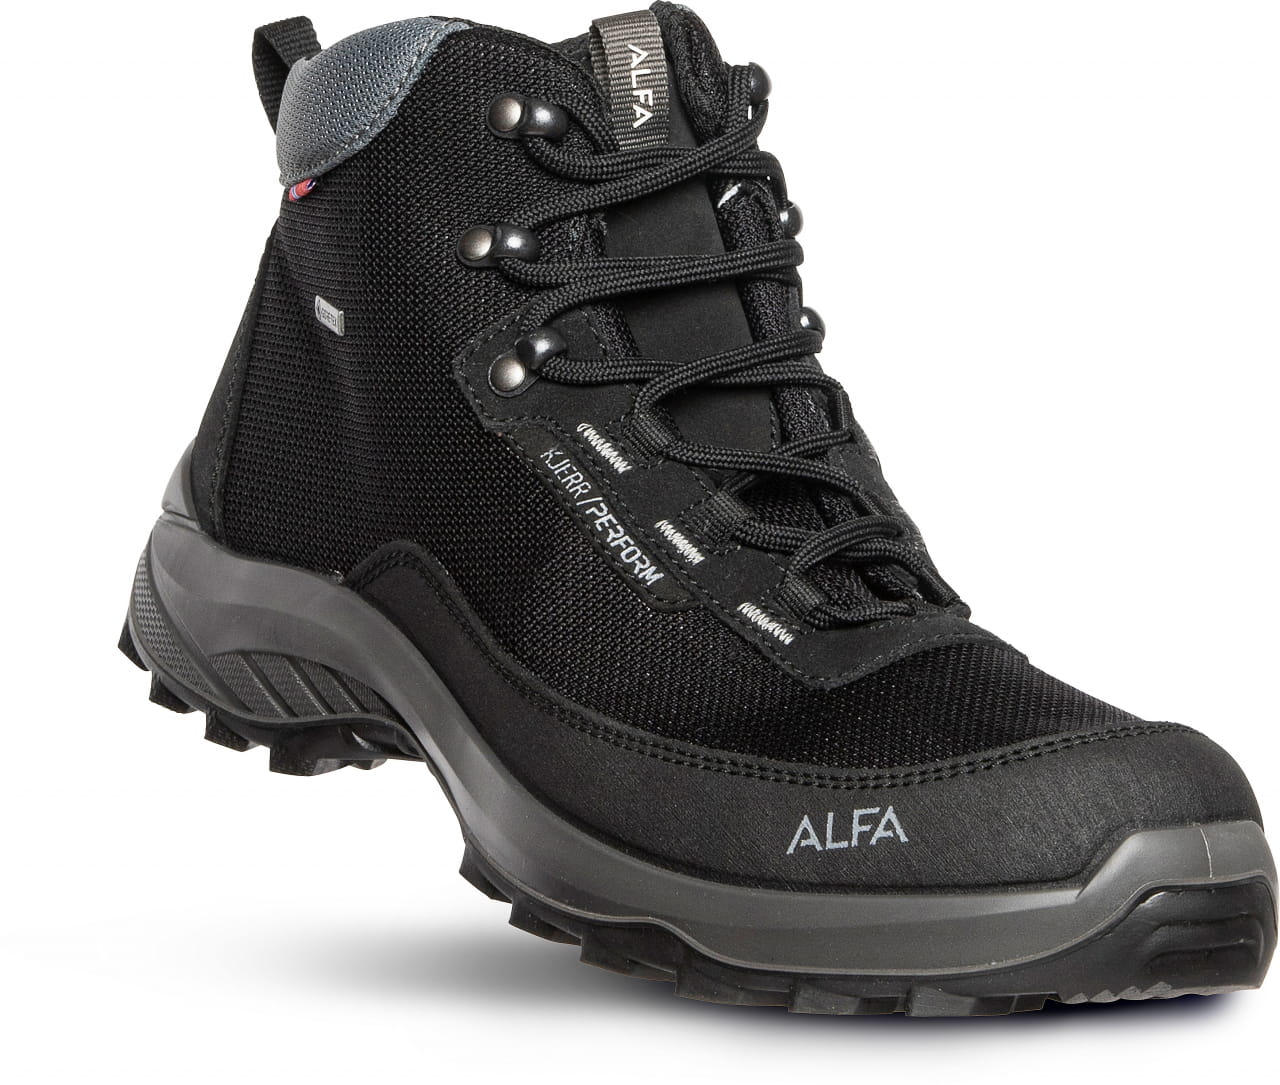 Outdoor-Schuhe für Männer Alfa Kjerr Perform GTX M